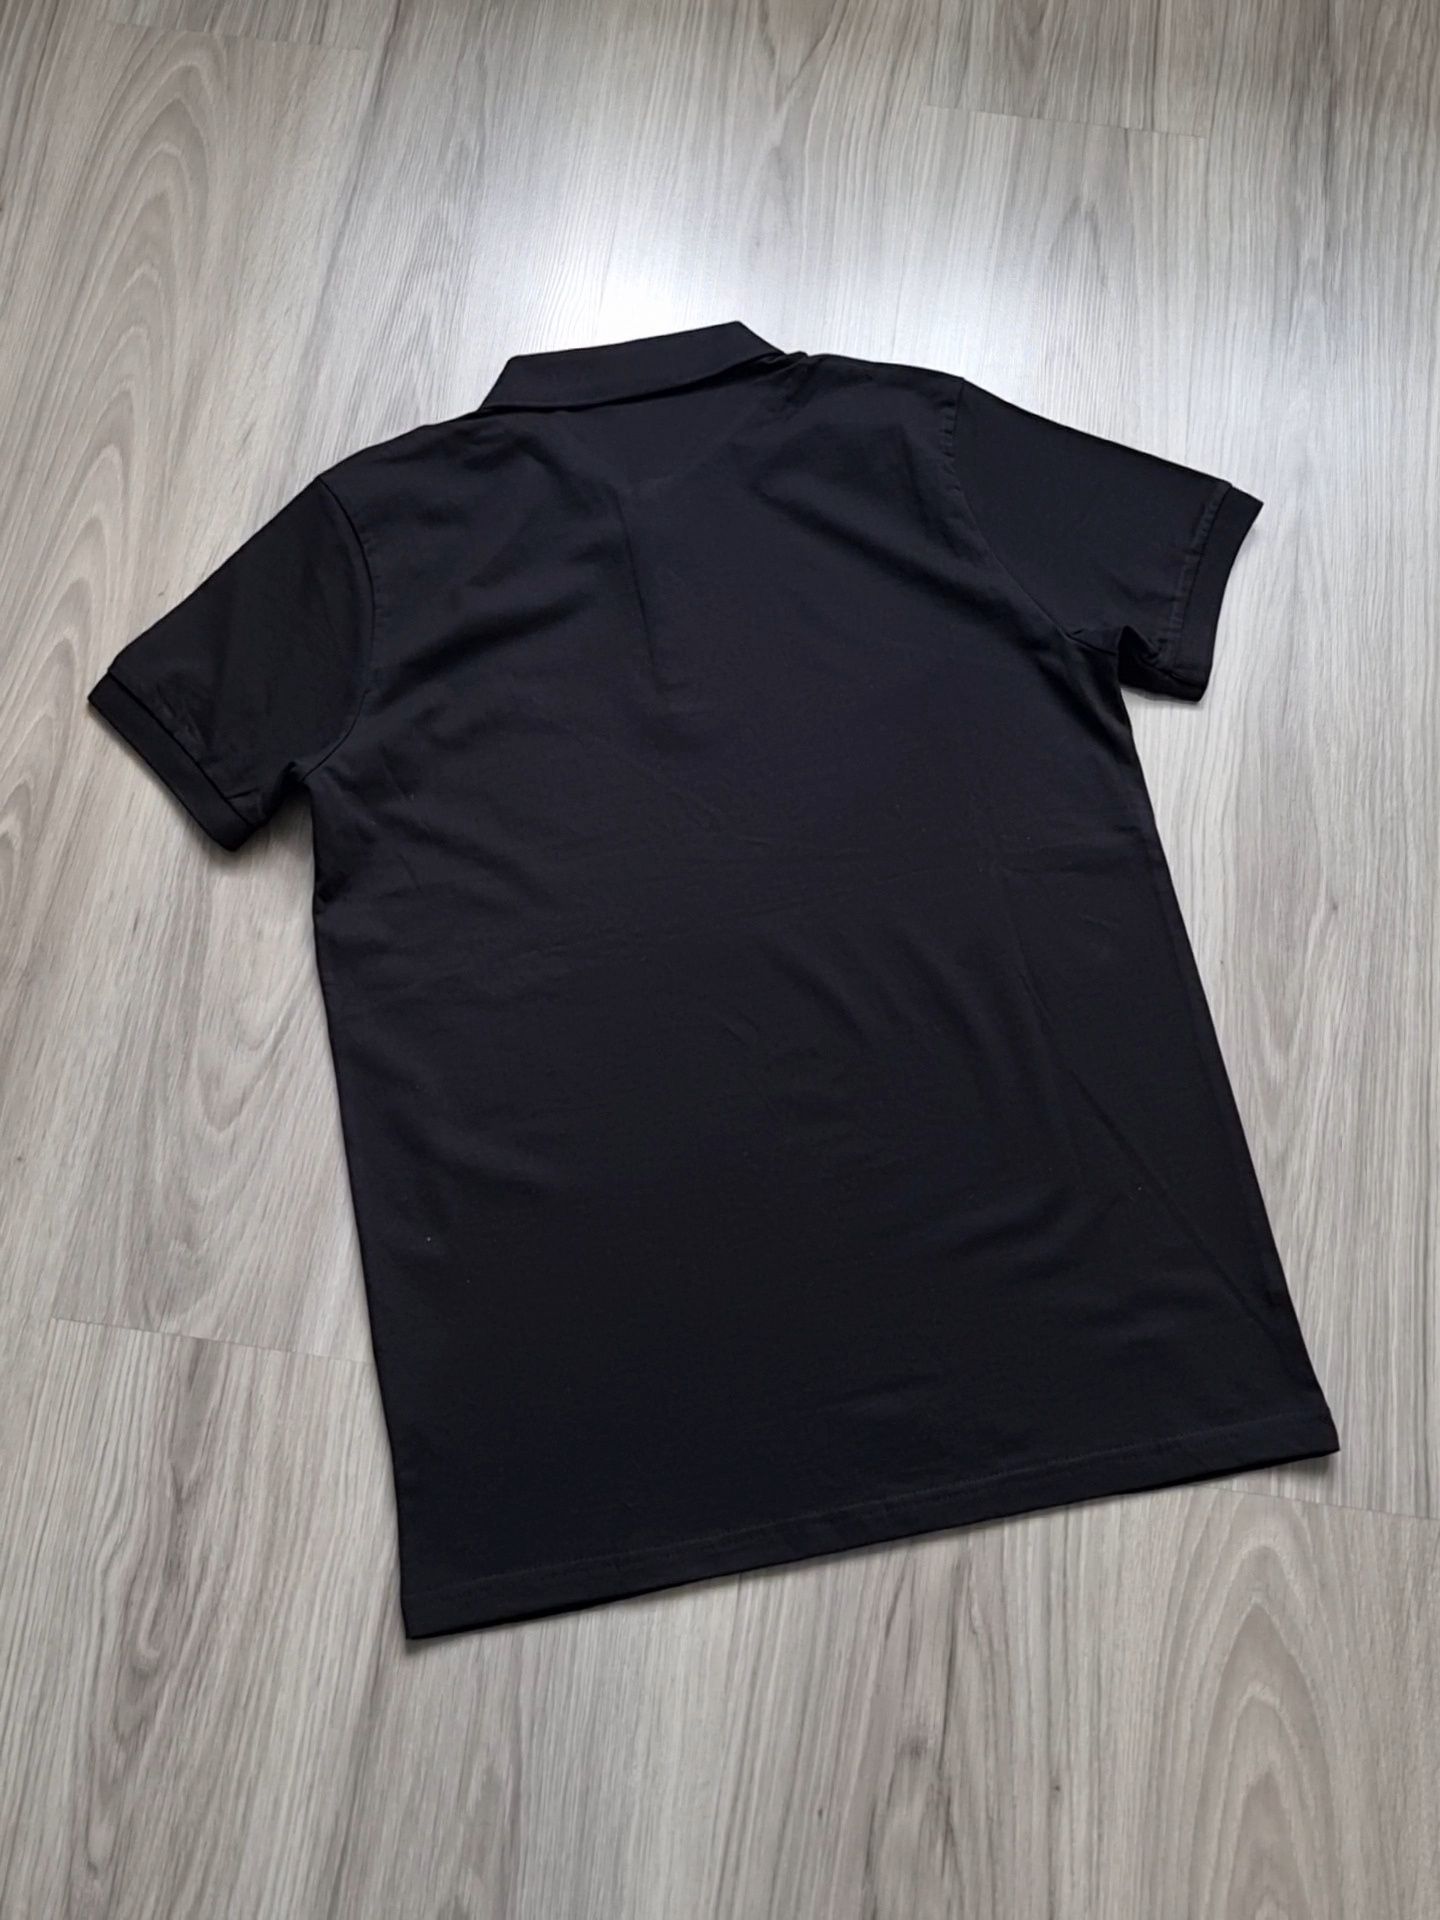 T-shirt/koszulka polo męska czarna Ralph Lauren rozmiar 3XL - POLECAM!